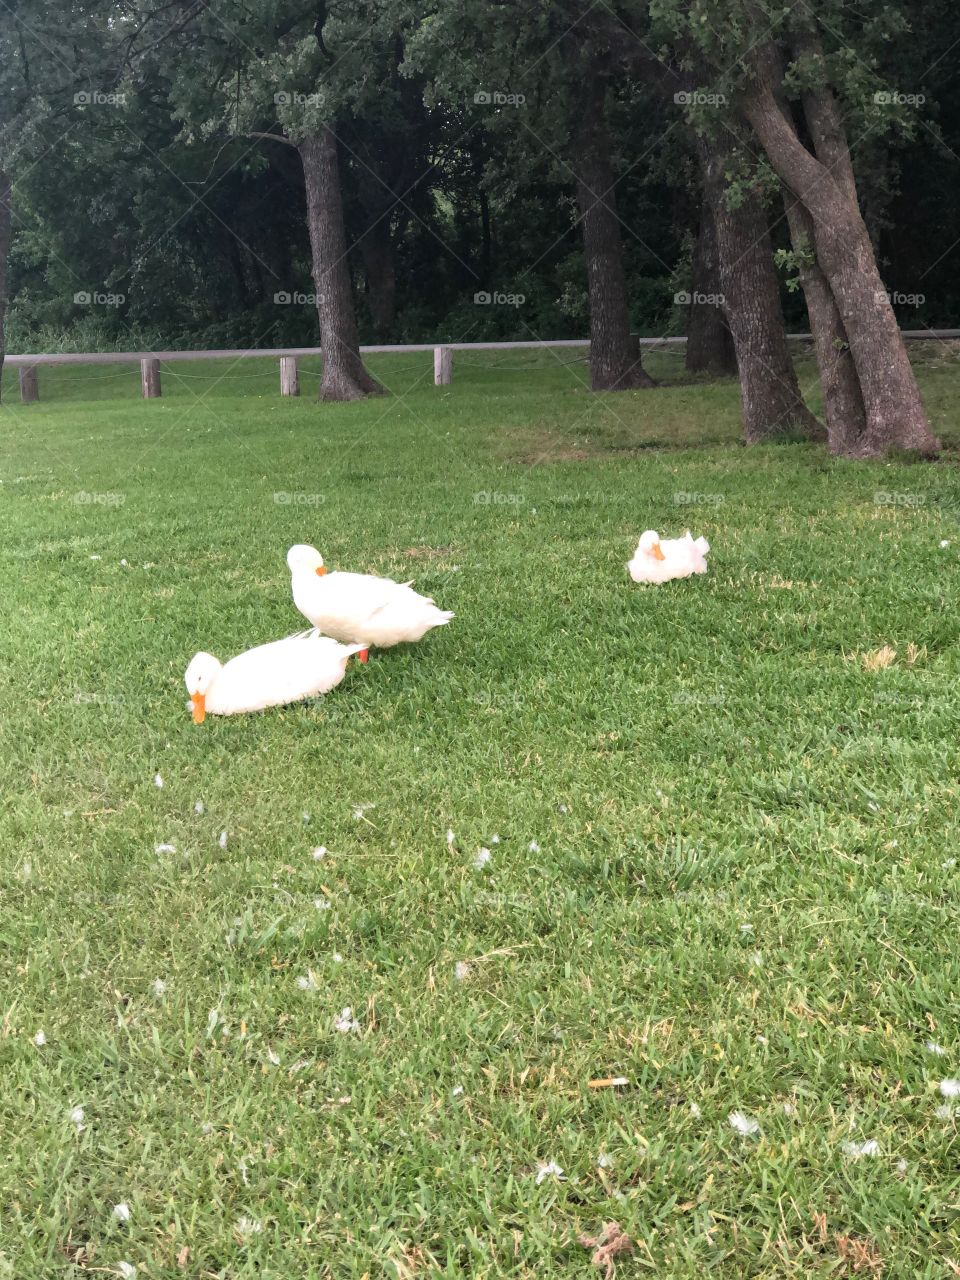 Ducks in the grass 